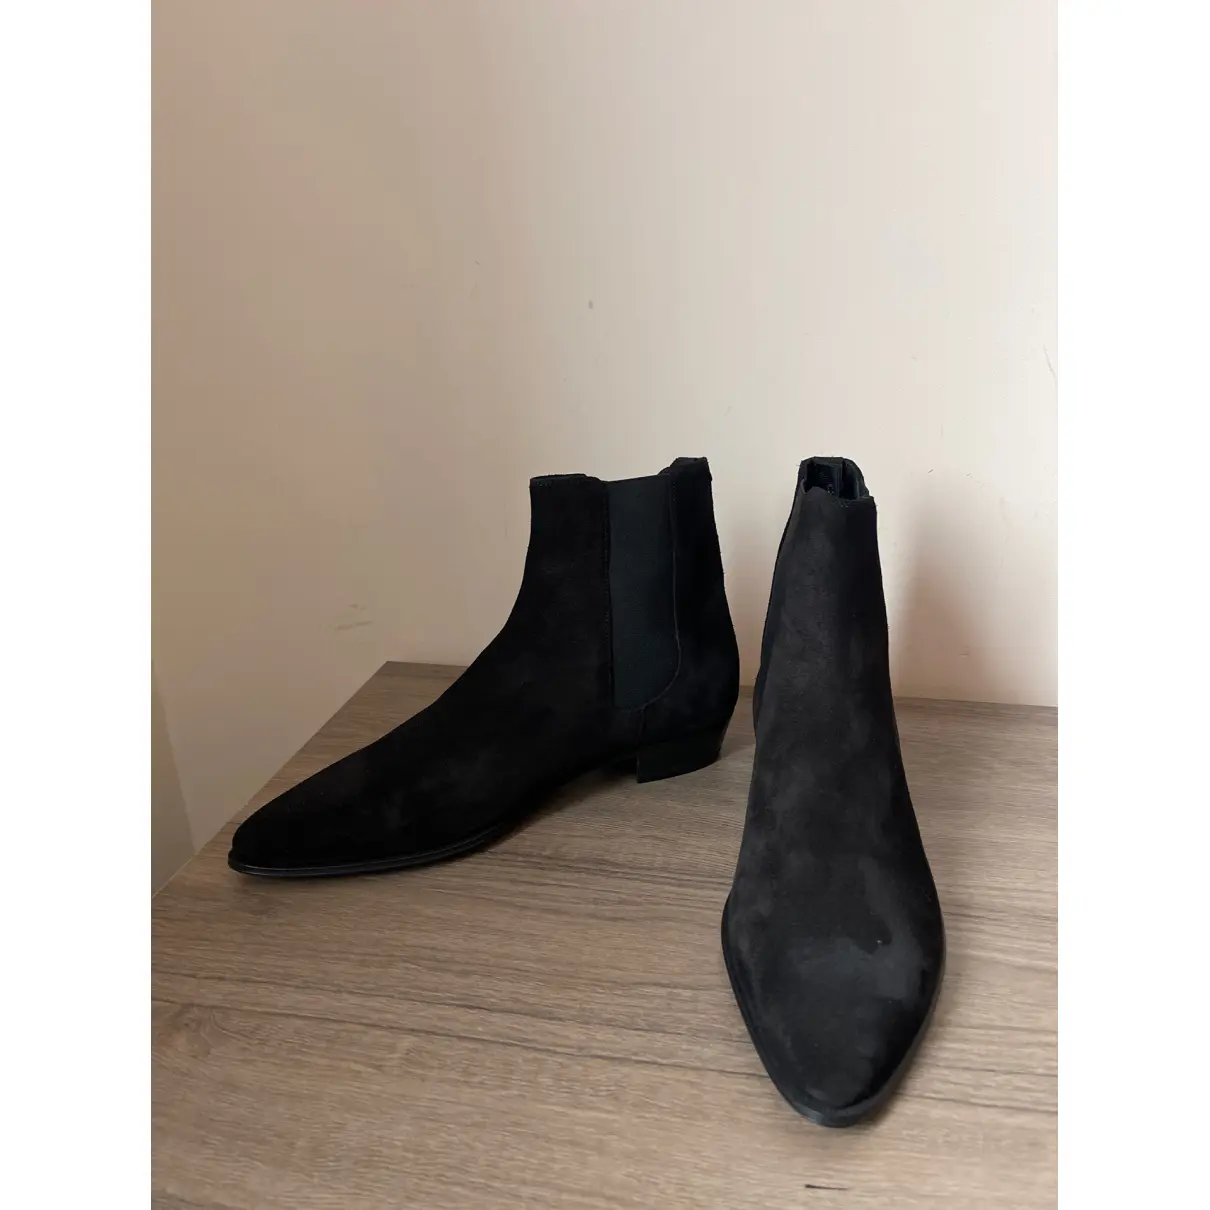 Buy Celine Jacno boots online